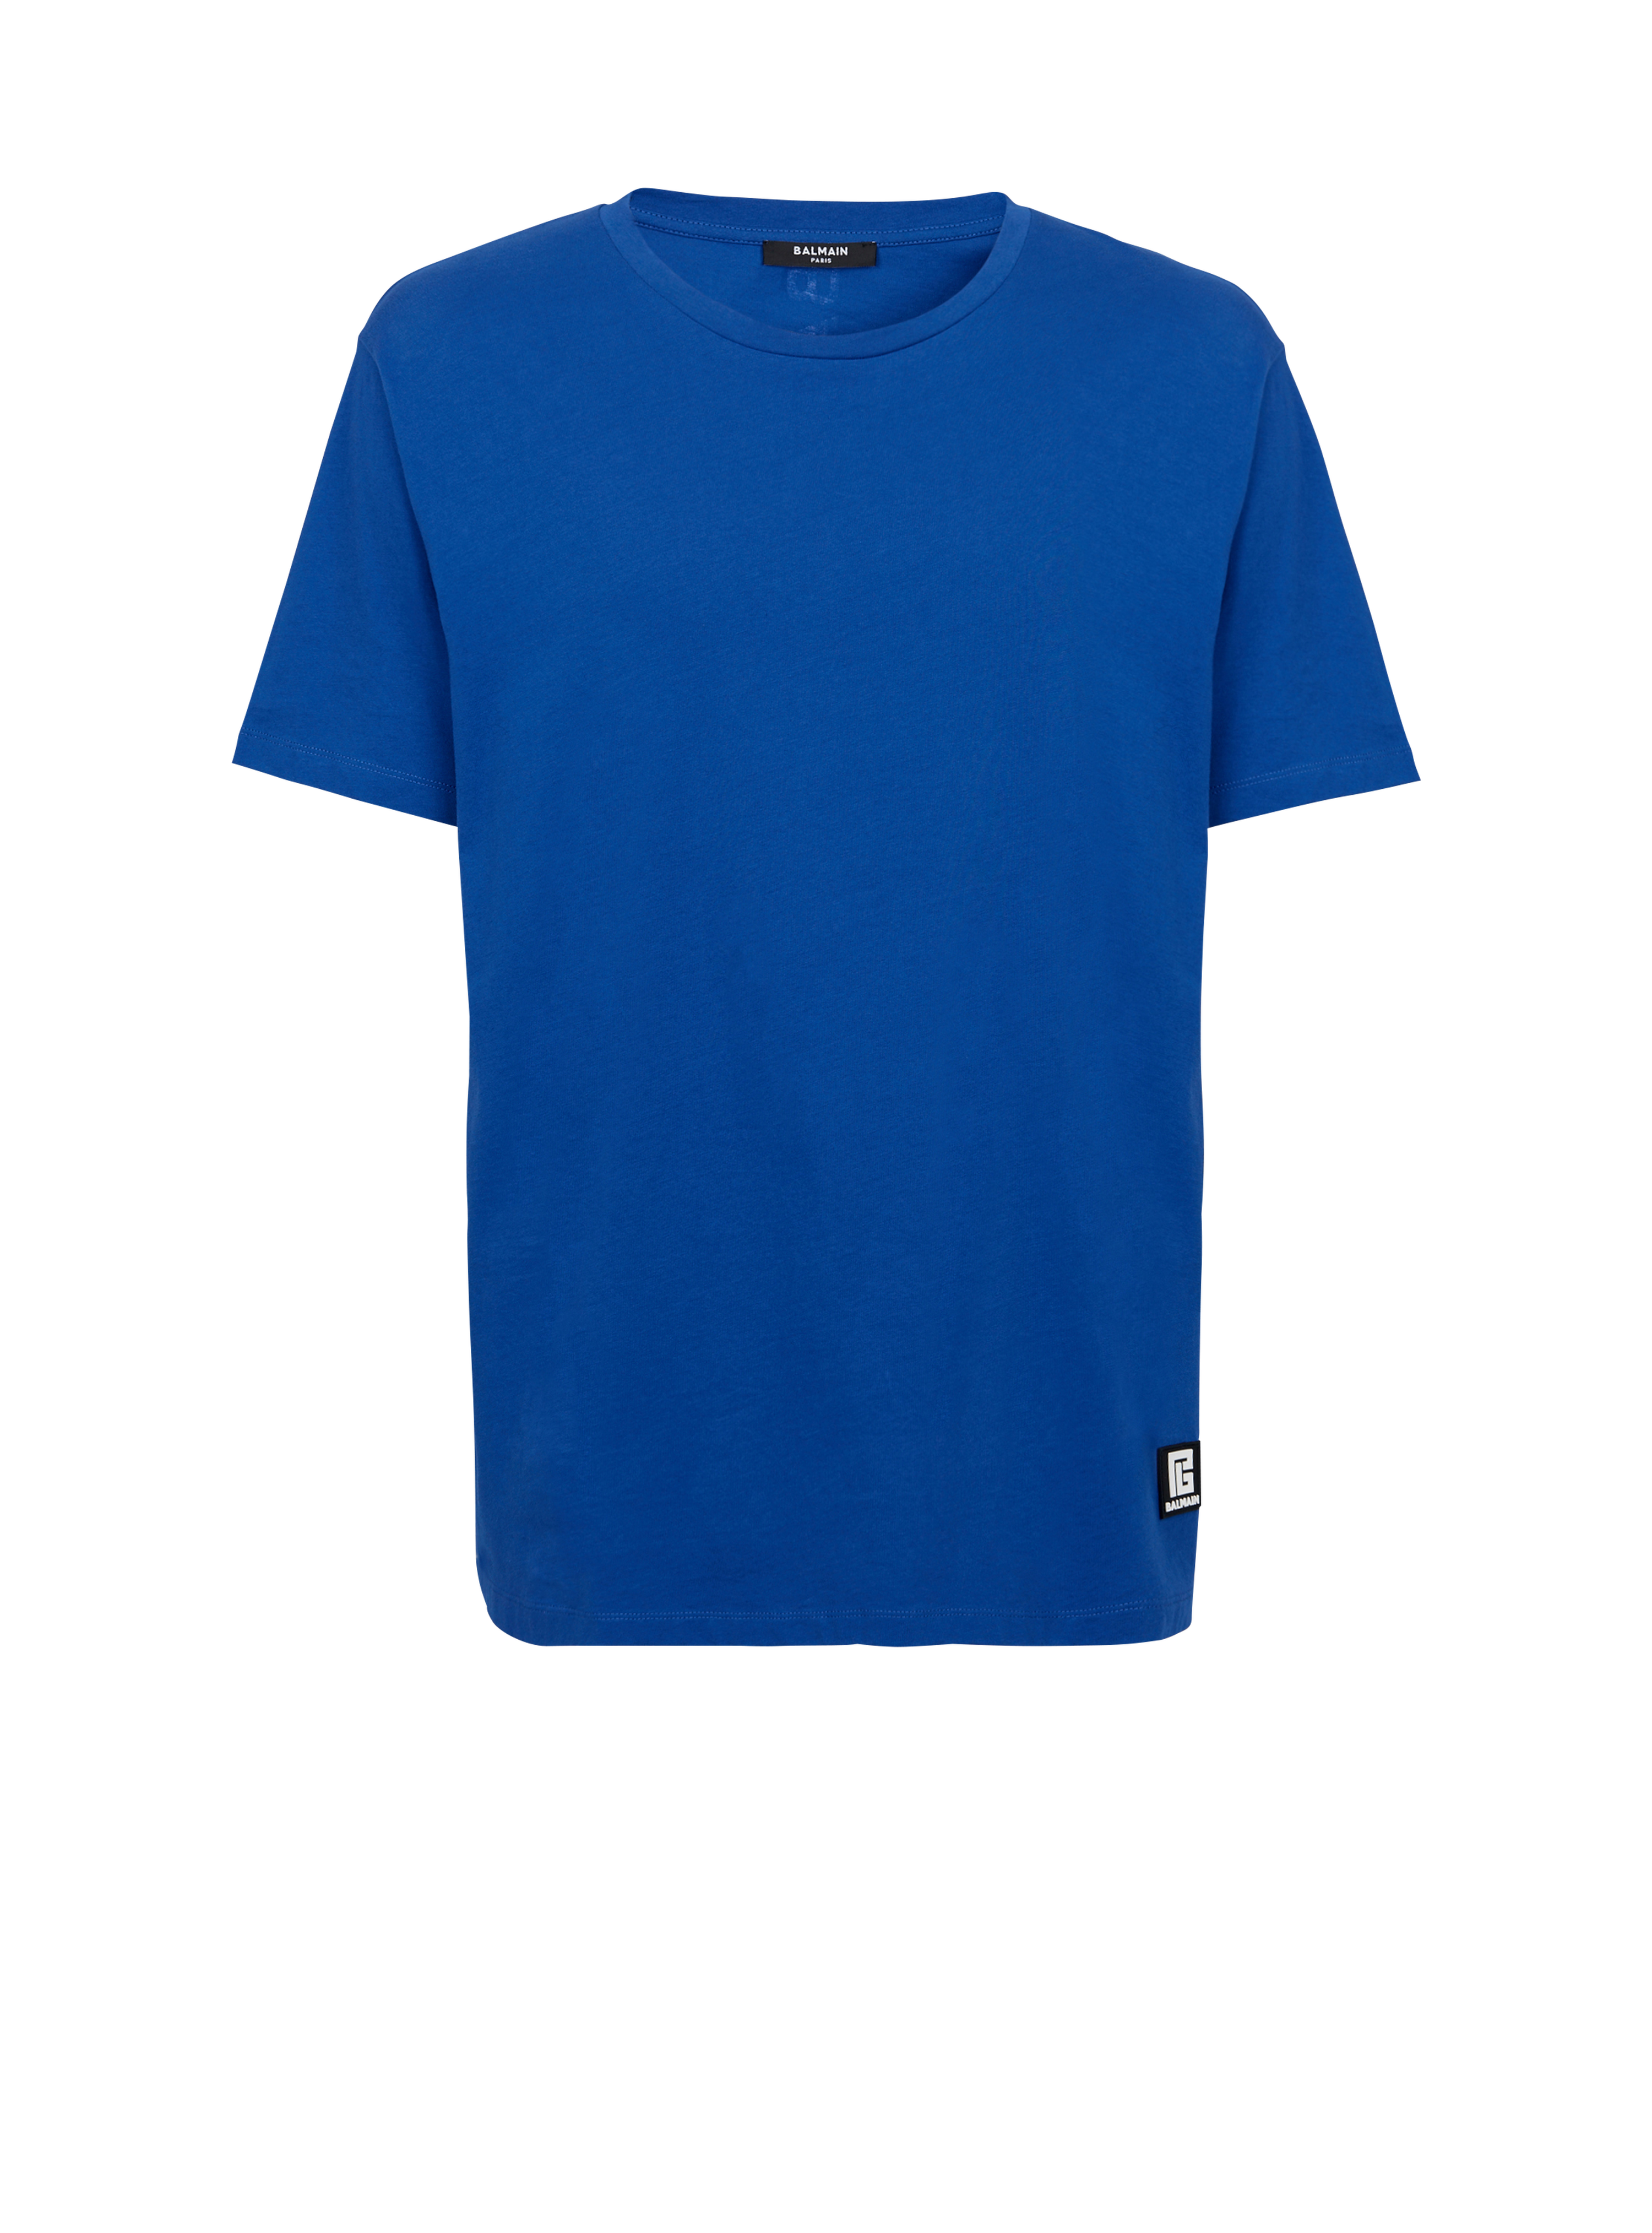 Oversized eco-designed cotton T-shirt with Balmain logo print, navy